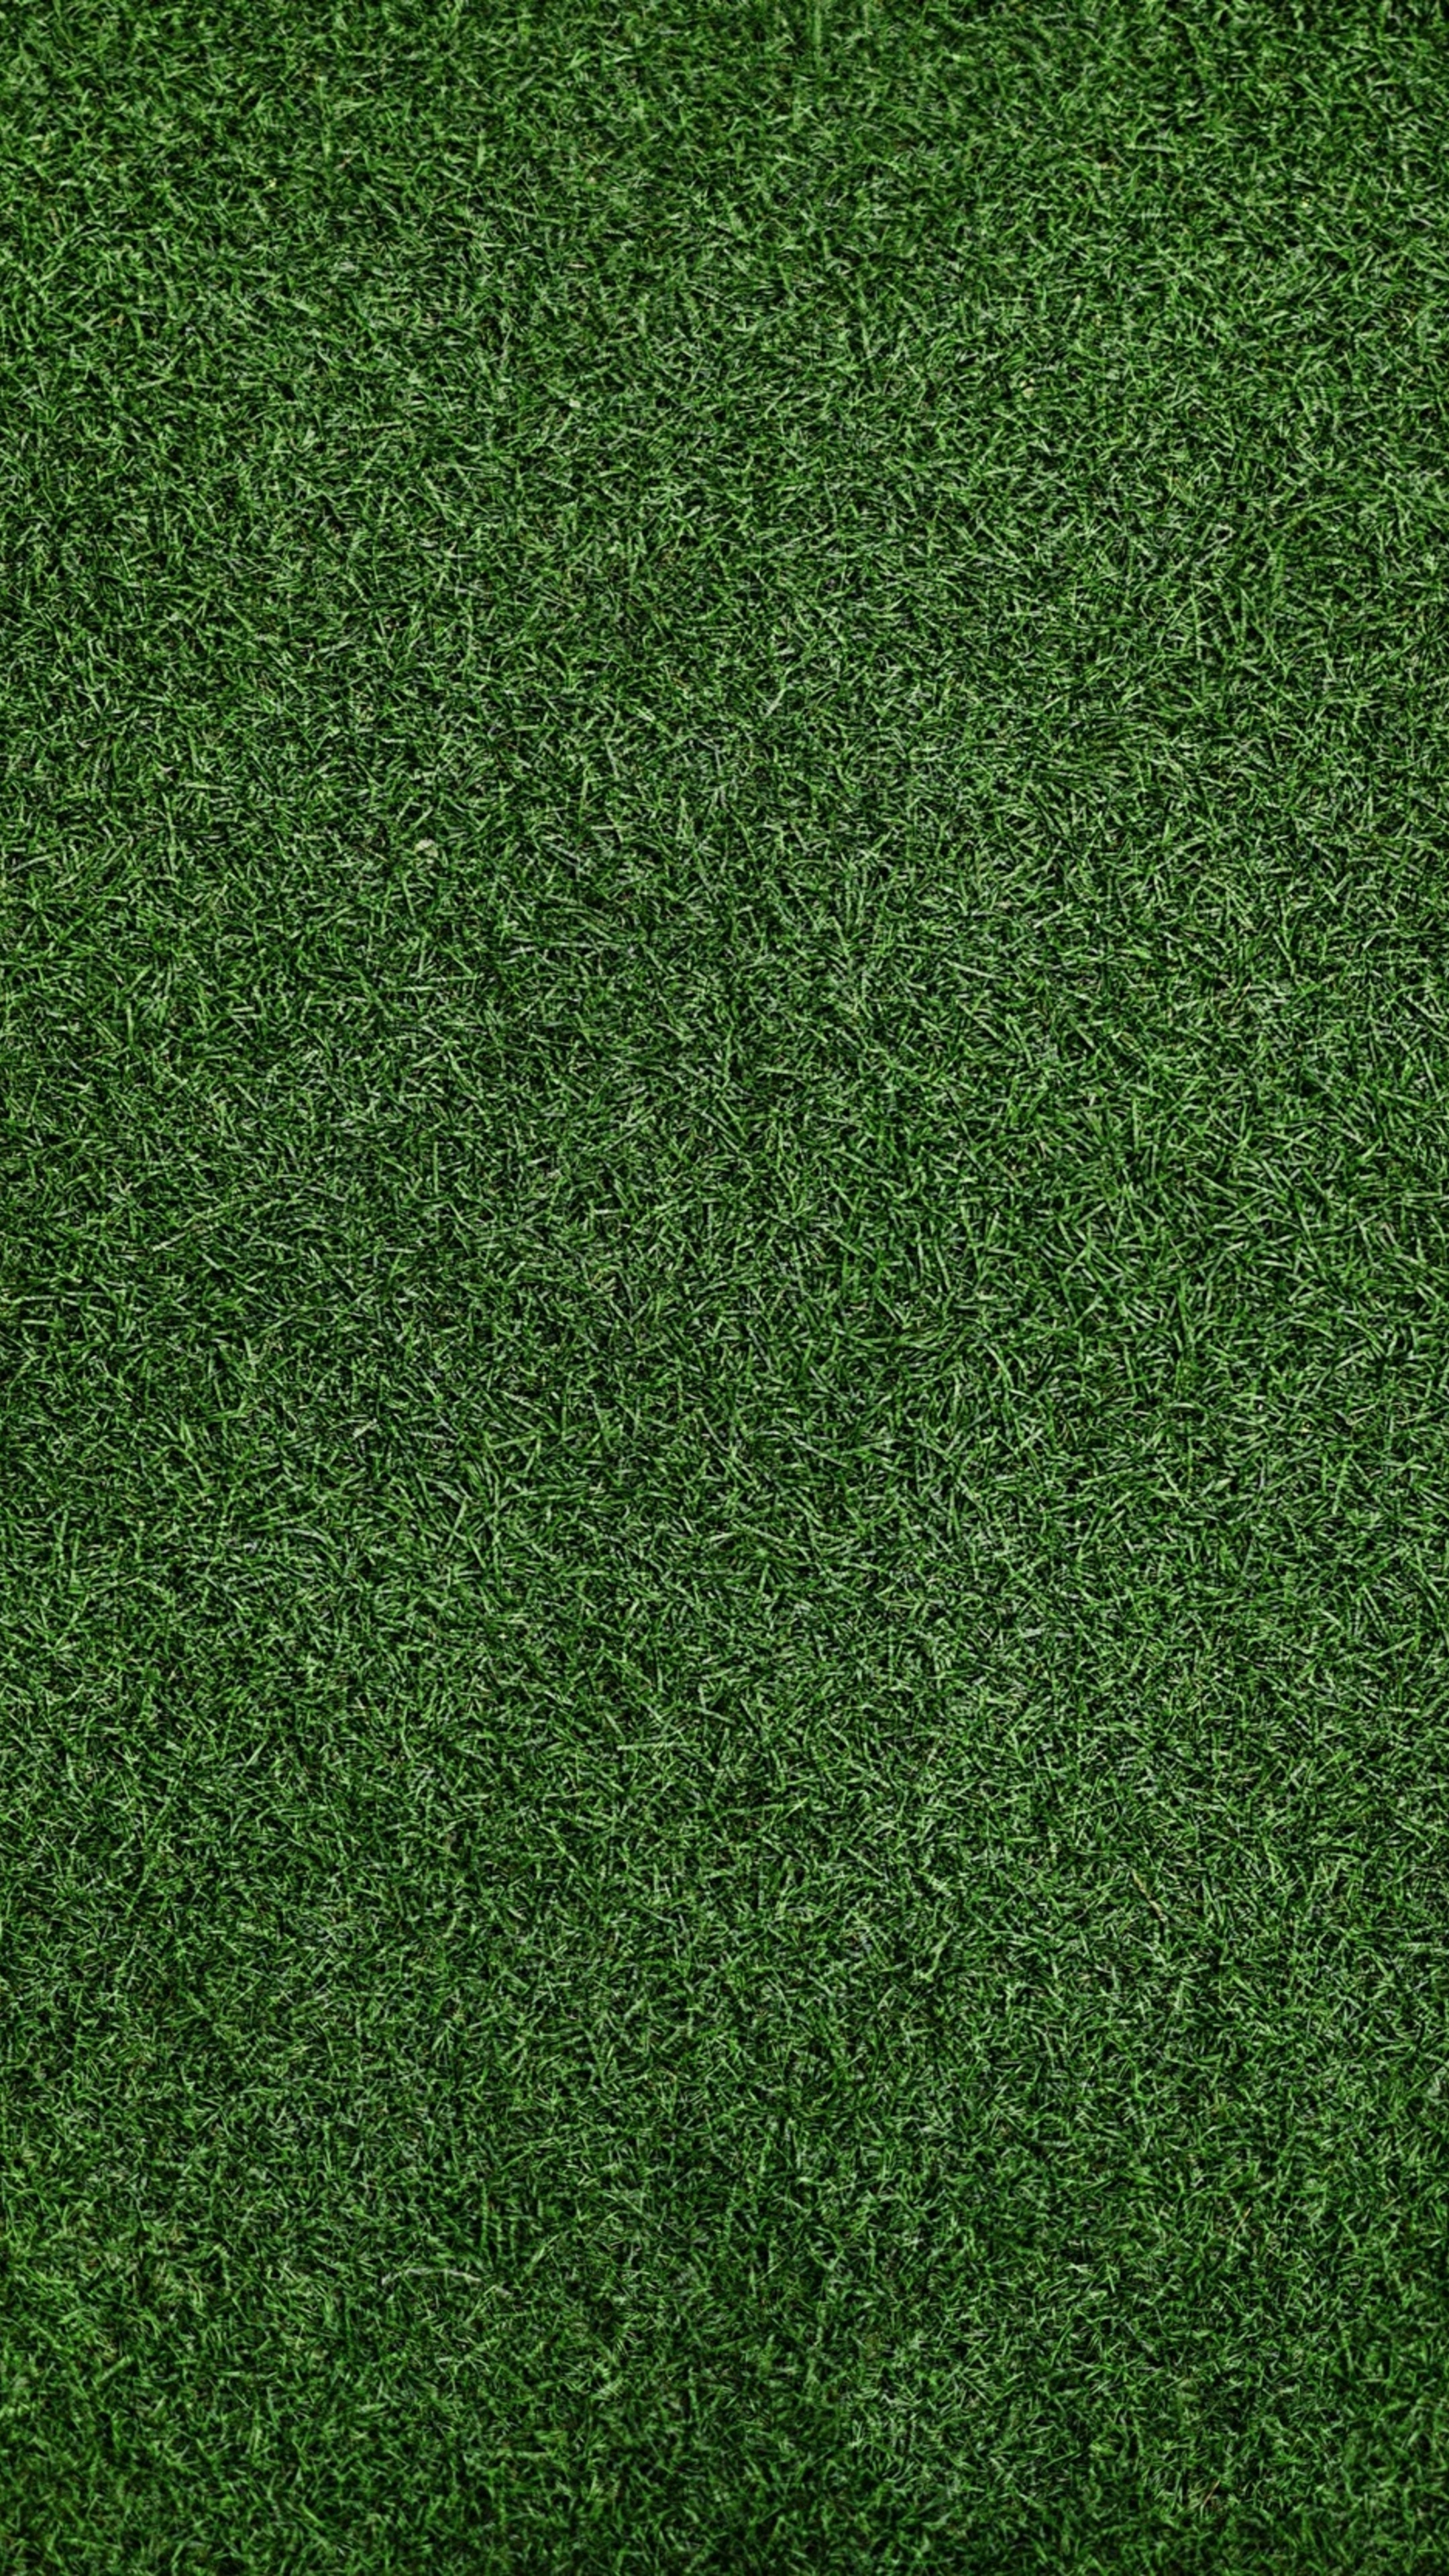 Grass background, Xperia x series, Premium HD, Vibrant images, 2160x3840 4K Handy